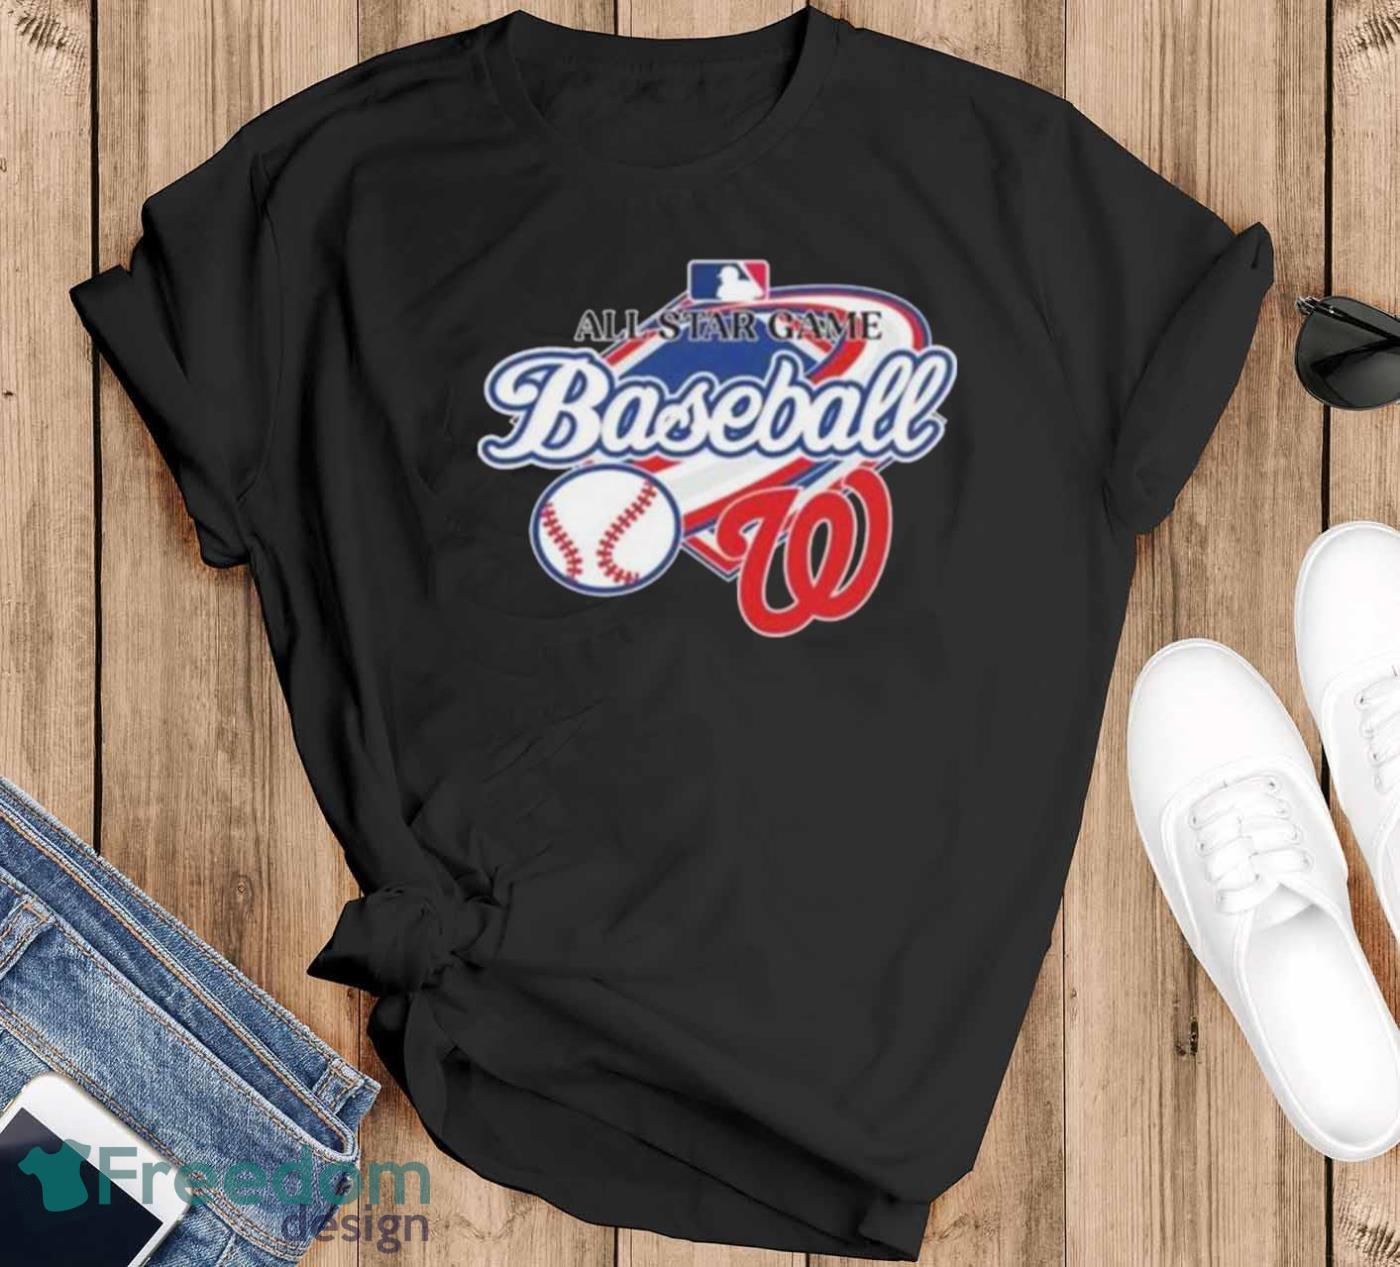 baseball all star t shirt designs